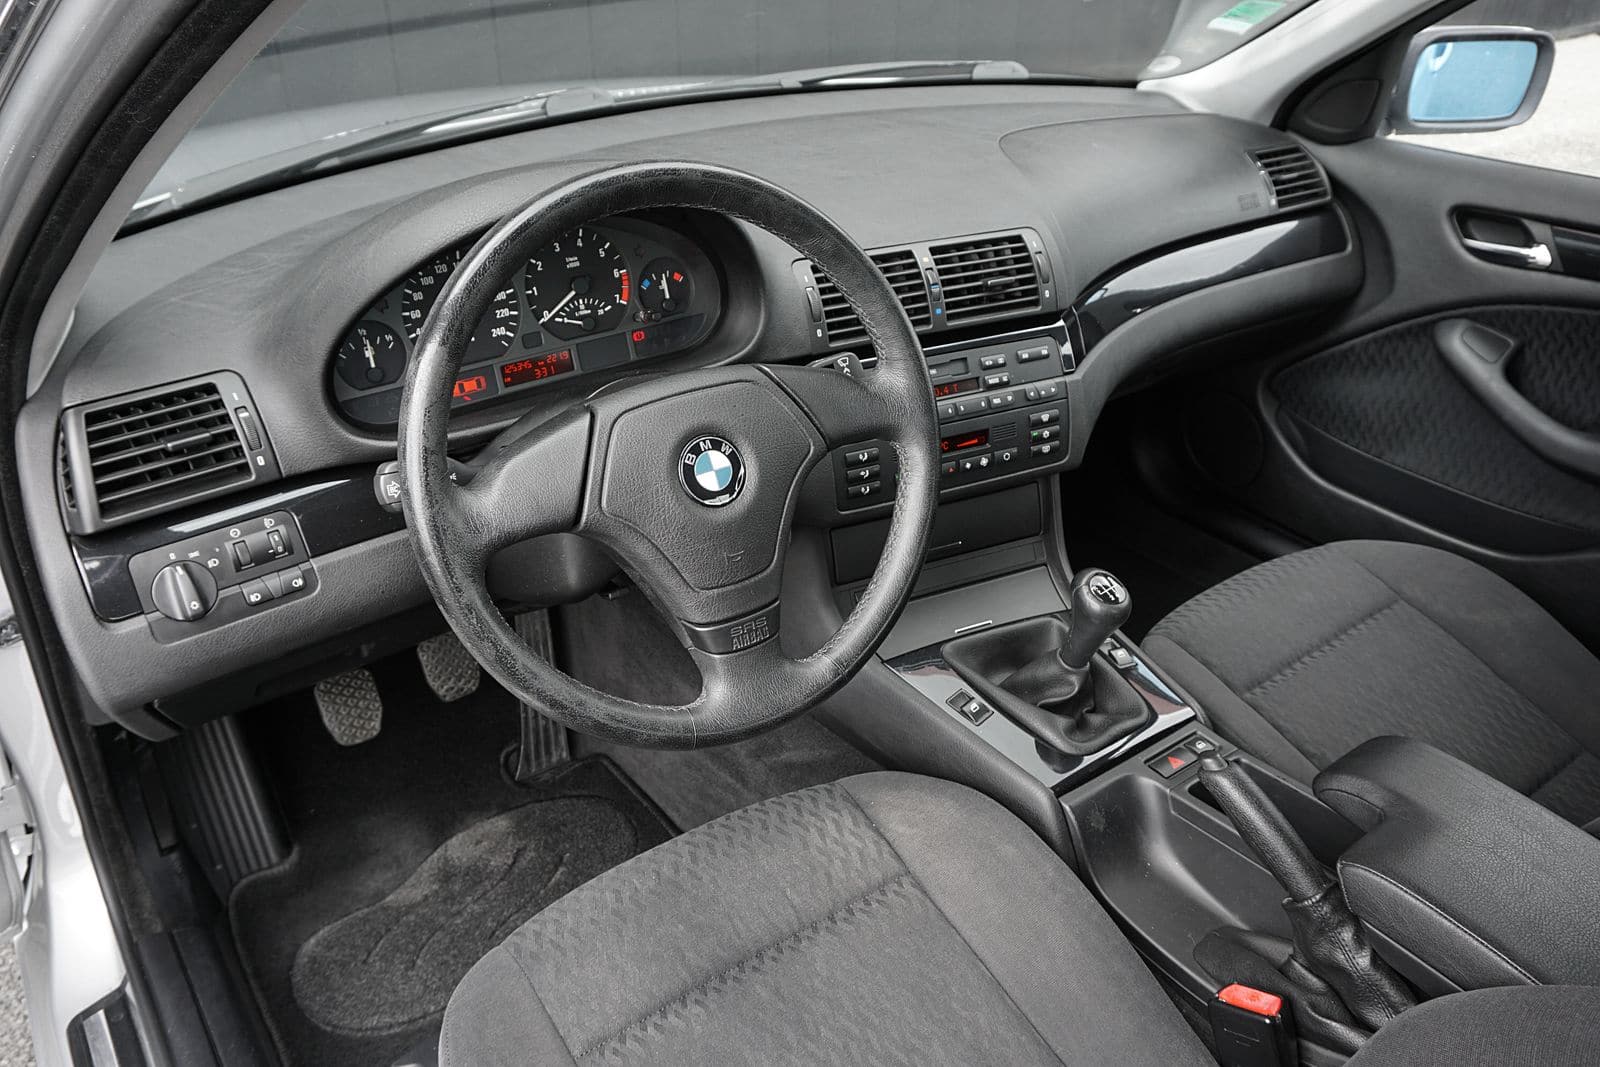 BMW 320i (E46) 2.0 150 Cv état collection Occasion 79 abcautofrance (abc auto france) 11